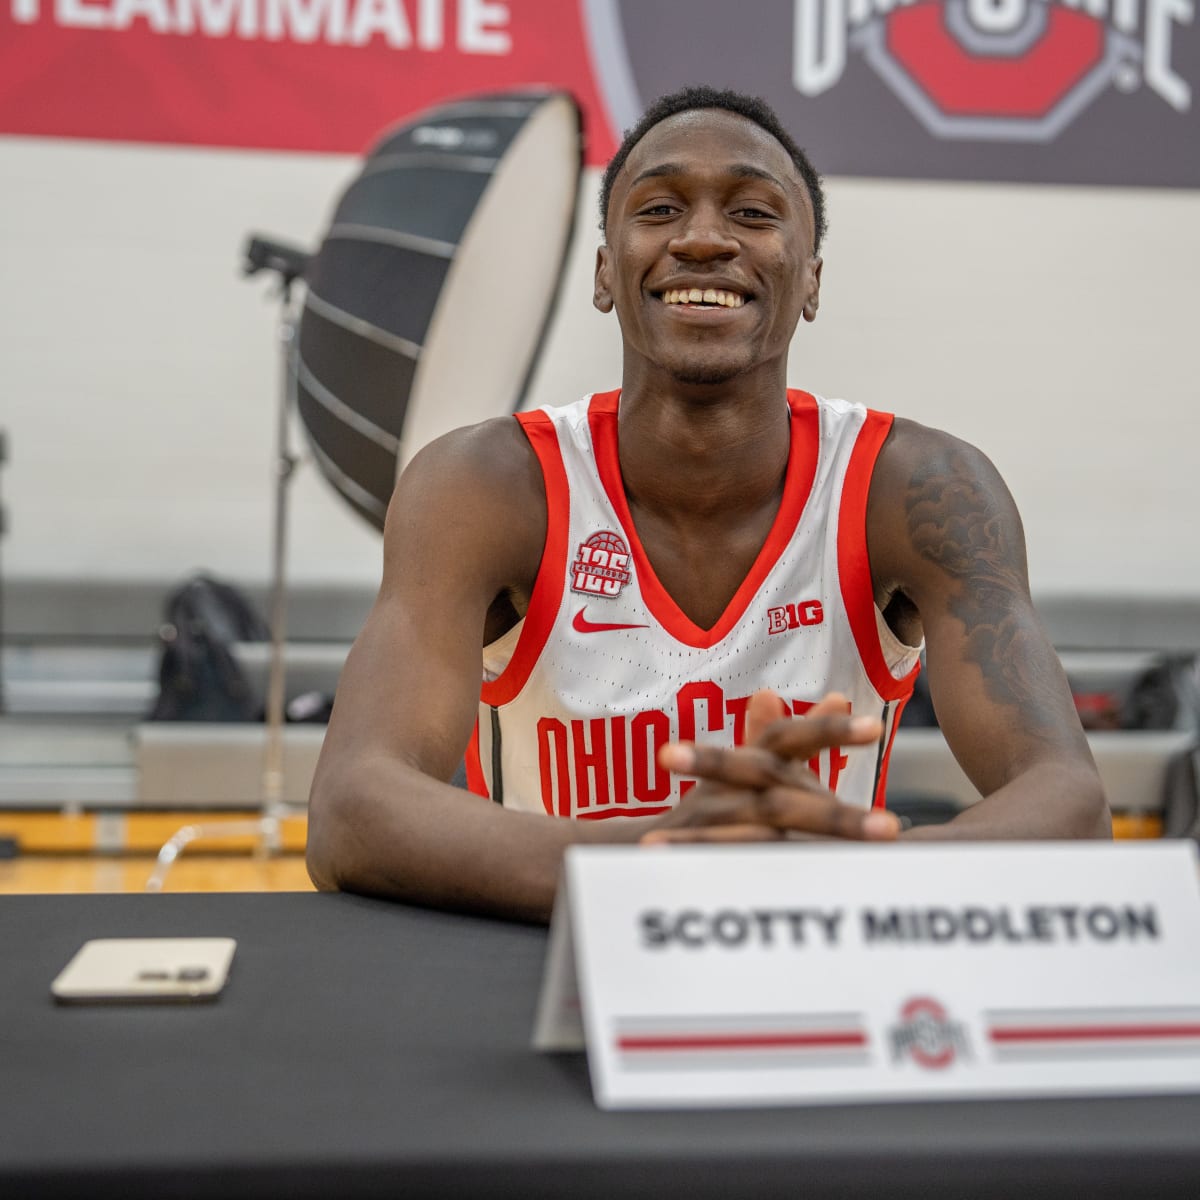 NBA Draft Scouting Report: Ohio State's Scotty Middleton - NBA